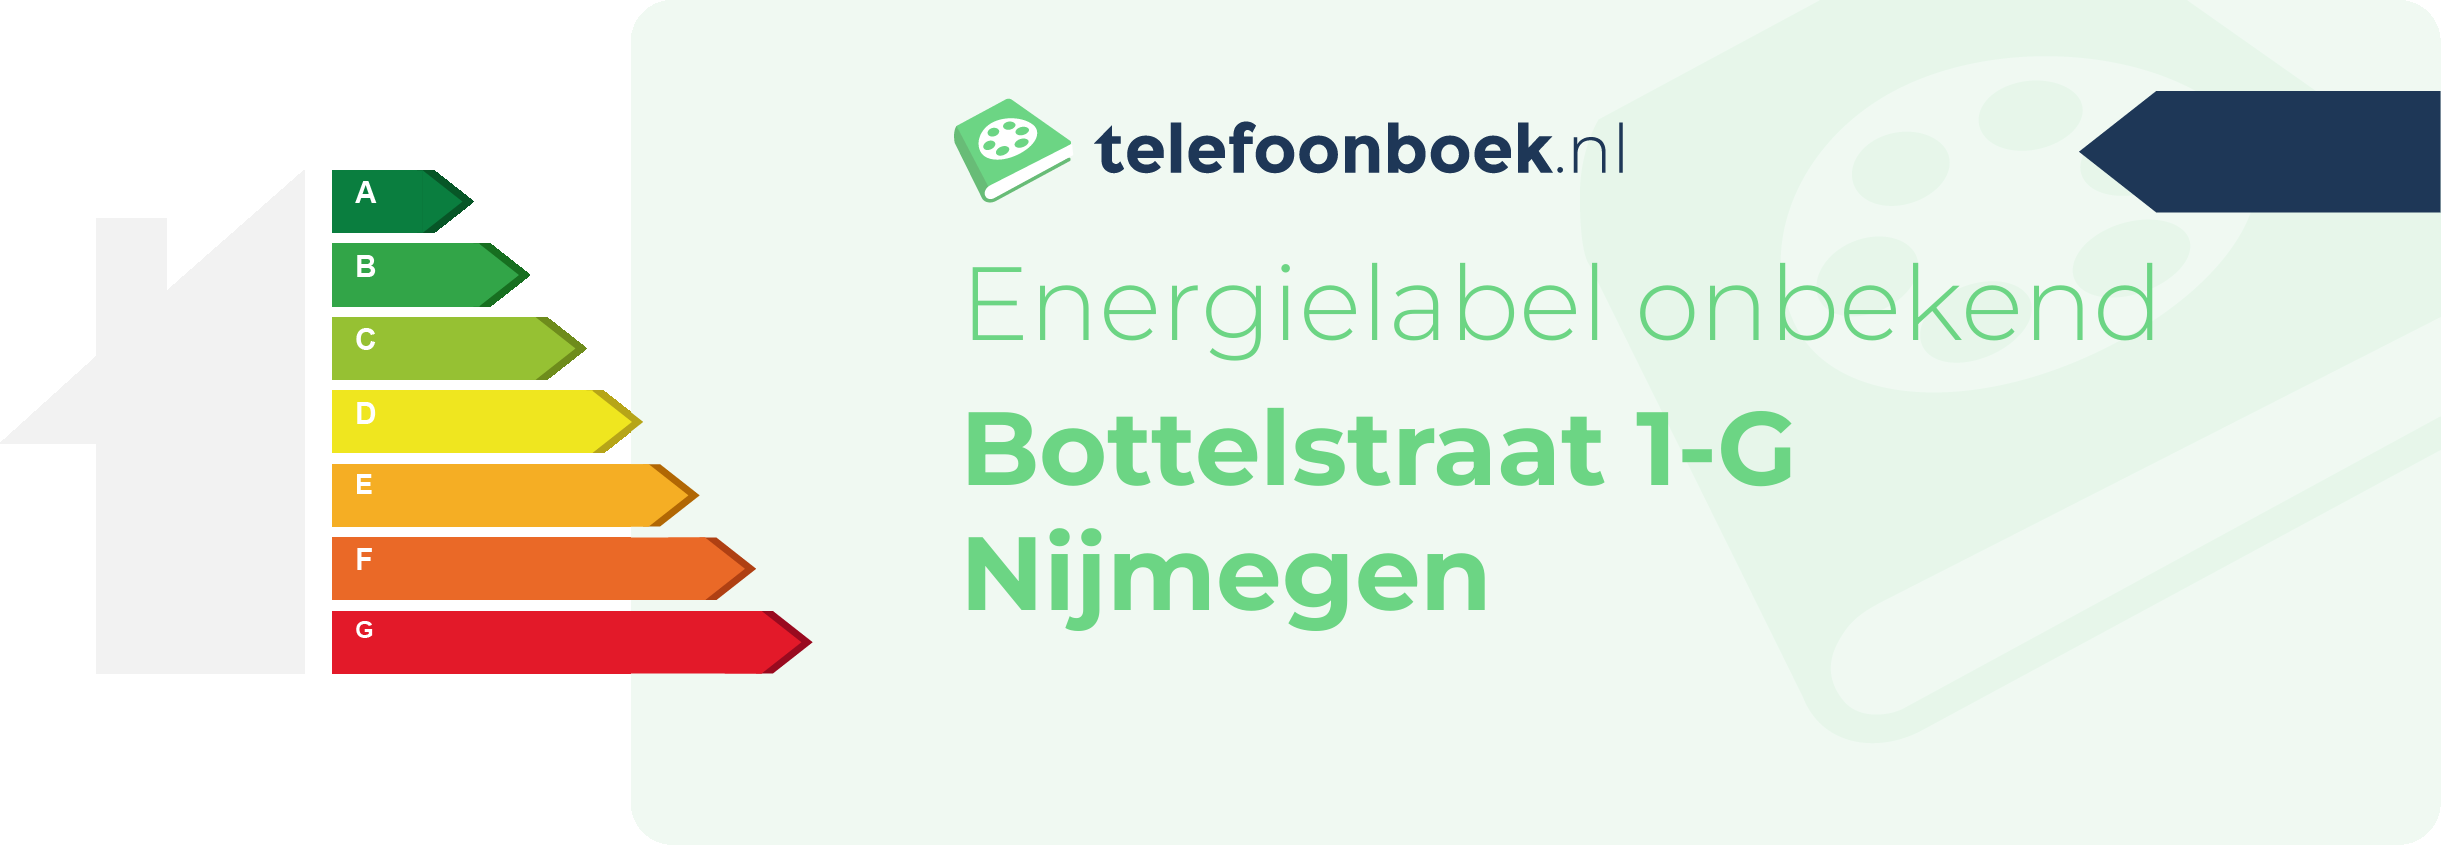 Energielabel Bottelstraat 1-G Nijmegen